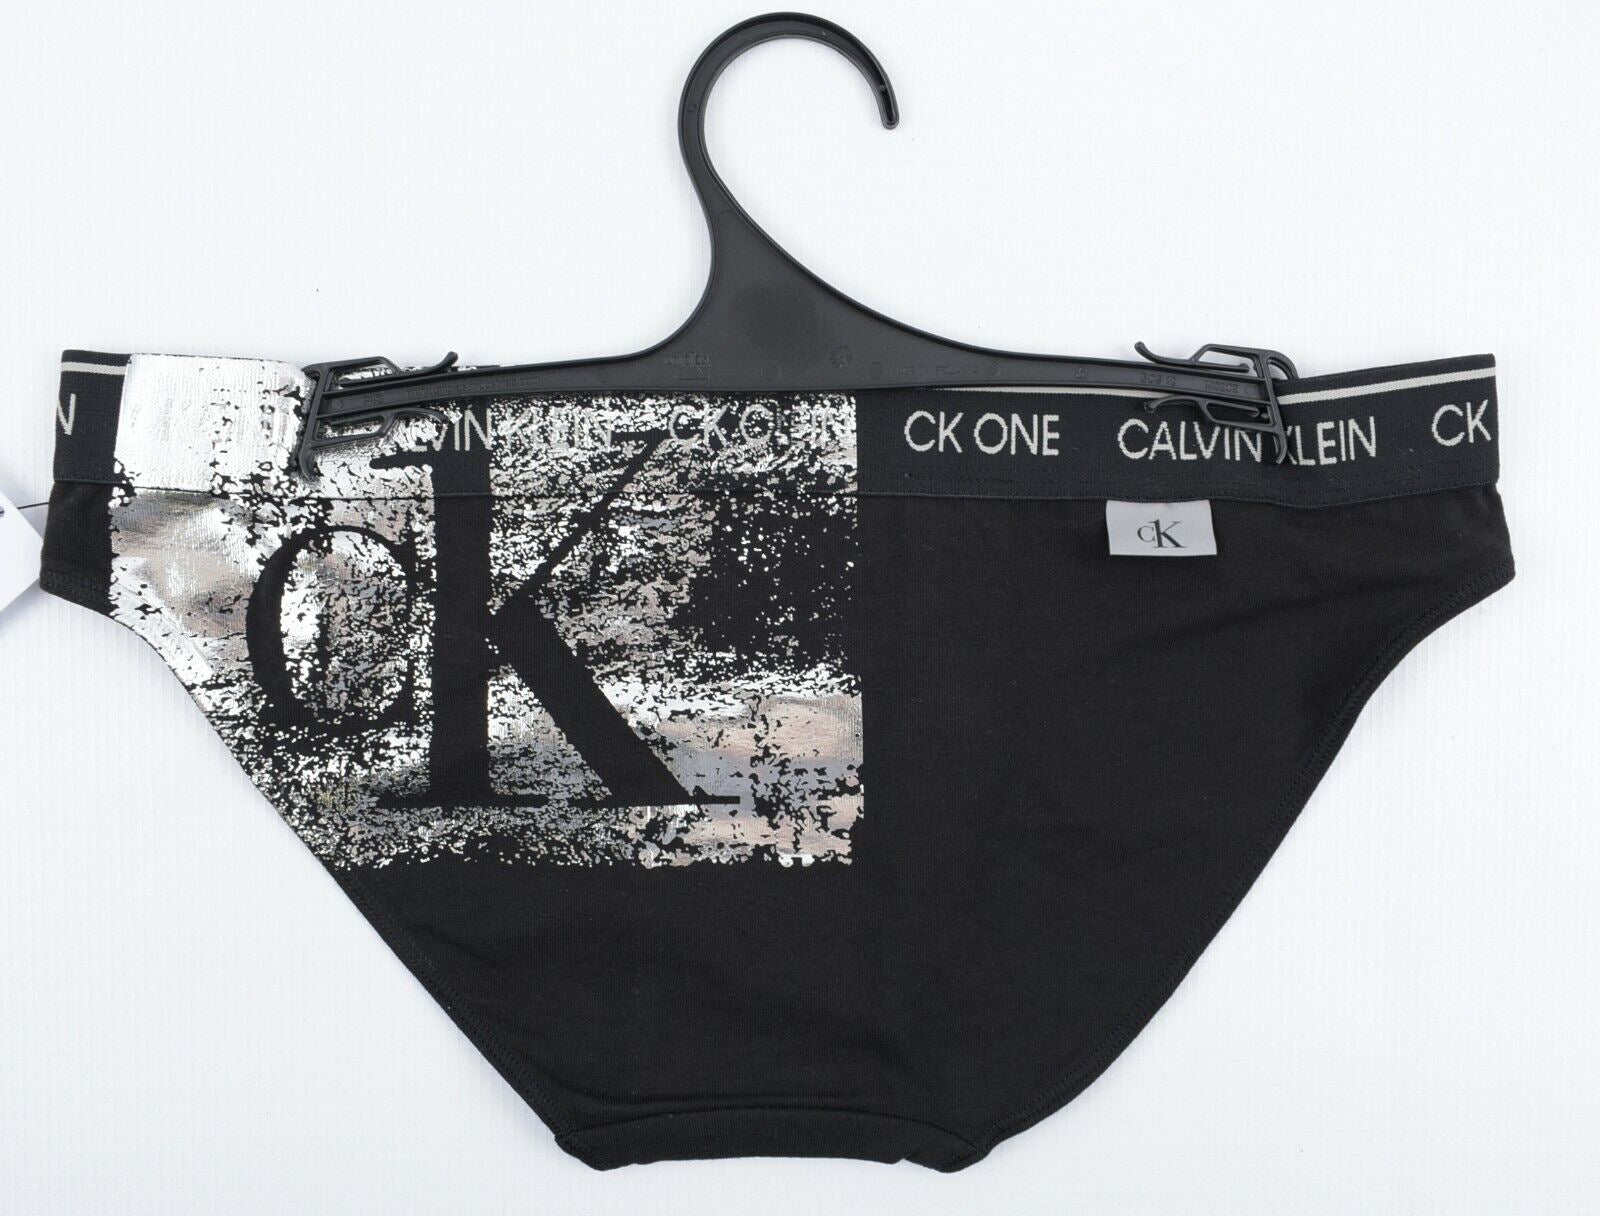 CALVIN KLEIN Underwear: CK ONE Women's Foil Bikini Briefs, Black, size M (UK 12)